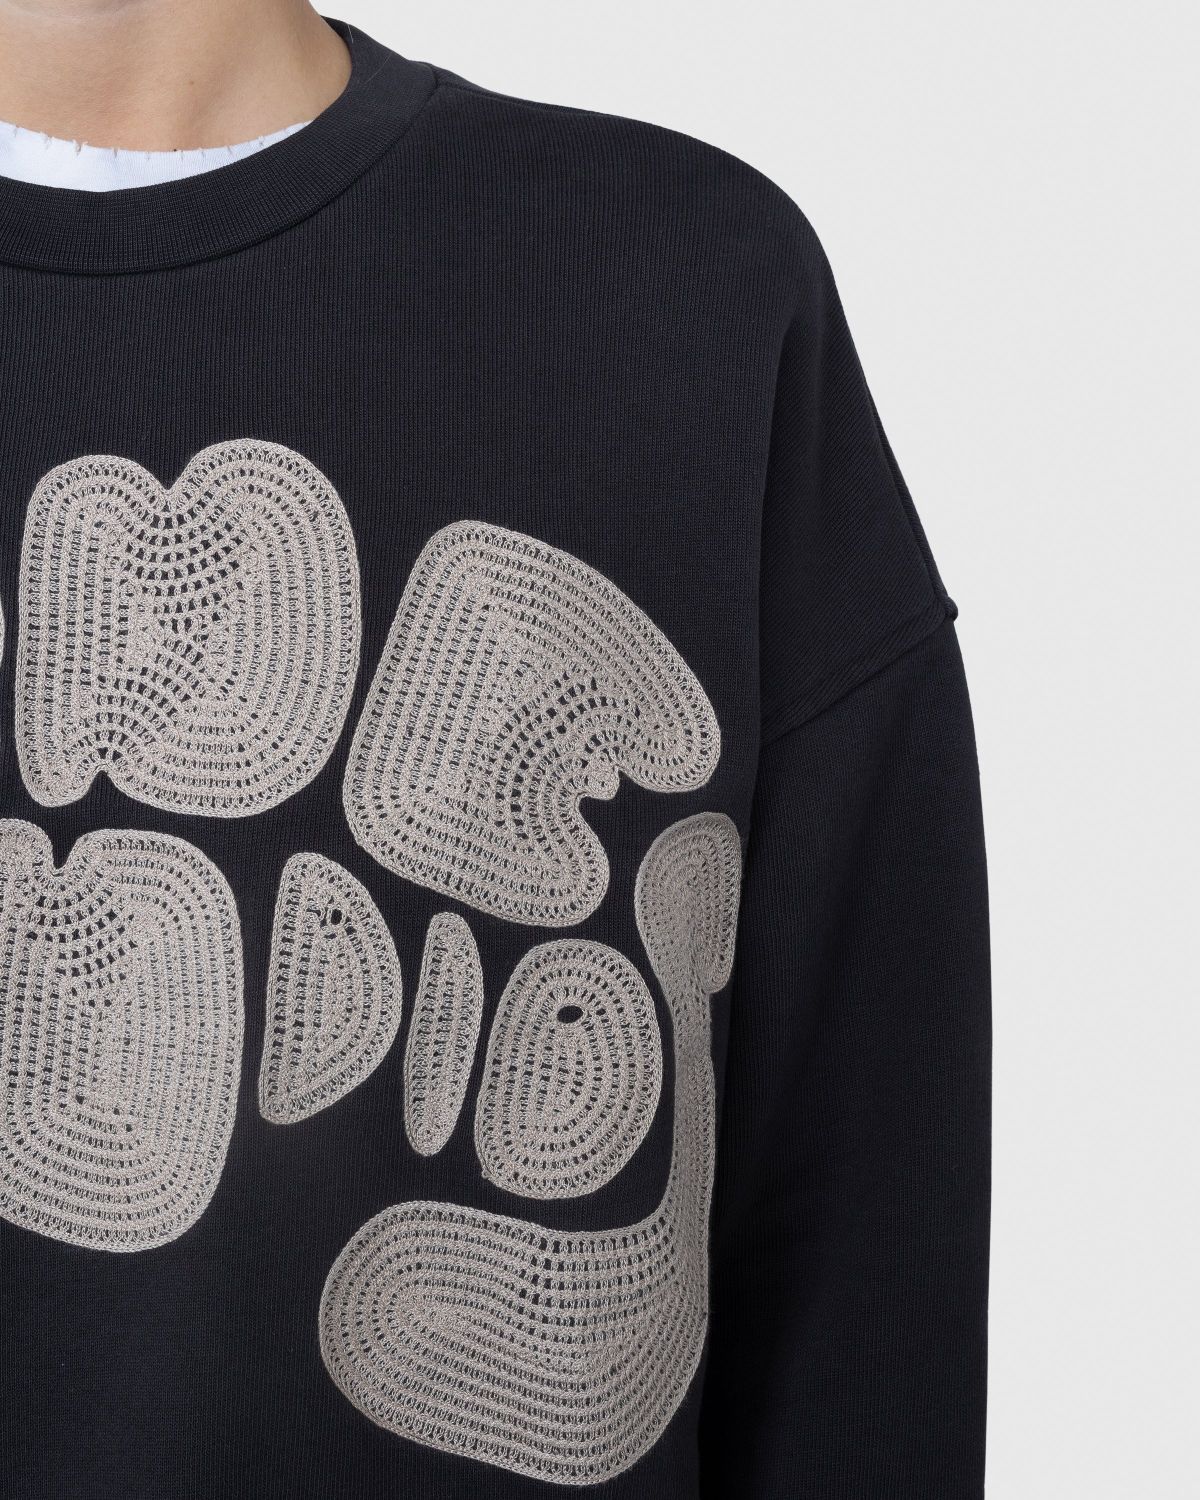 Acne Studios – Bubble Logo Crewneck Sweater Anthracite Grey - Knitwear - Black - Image 6